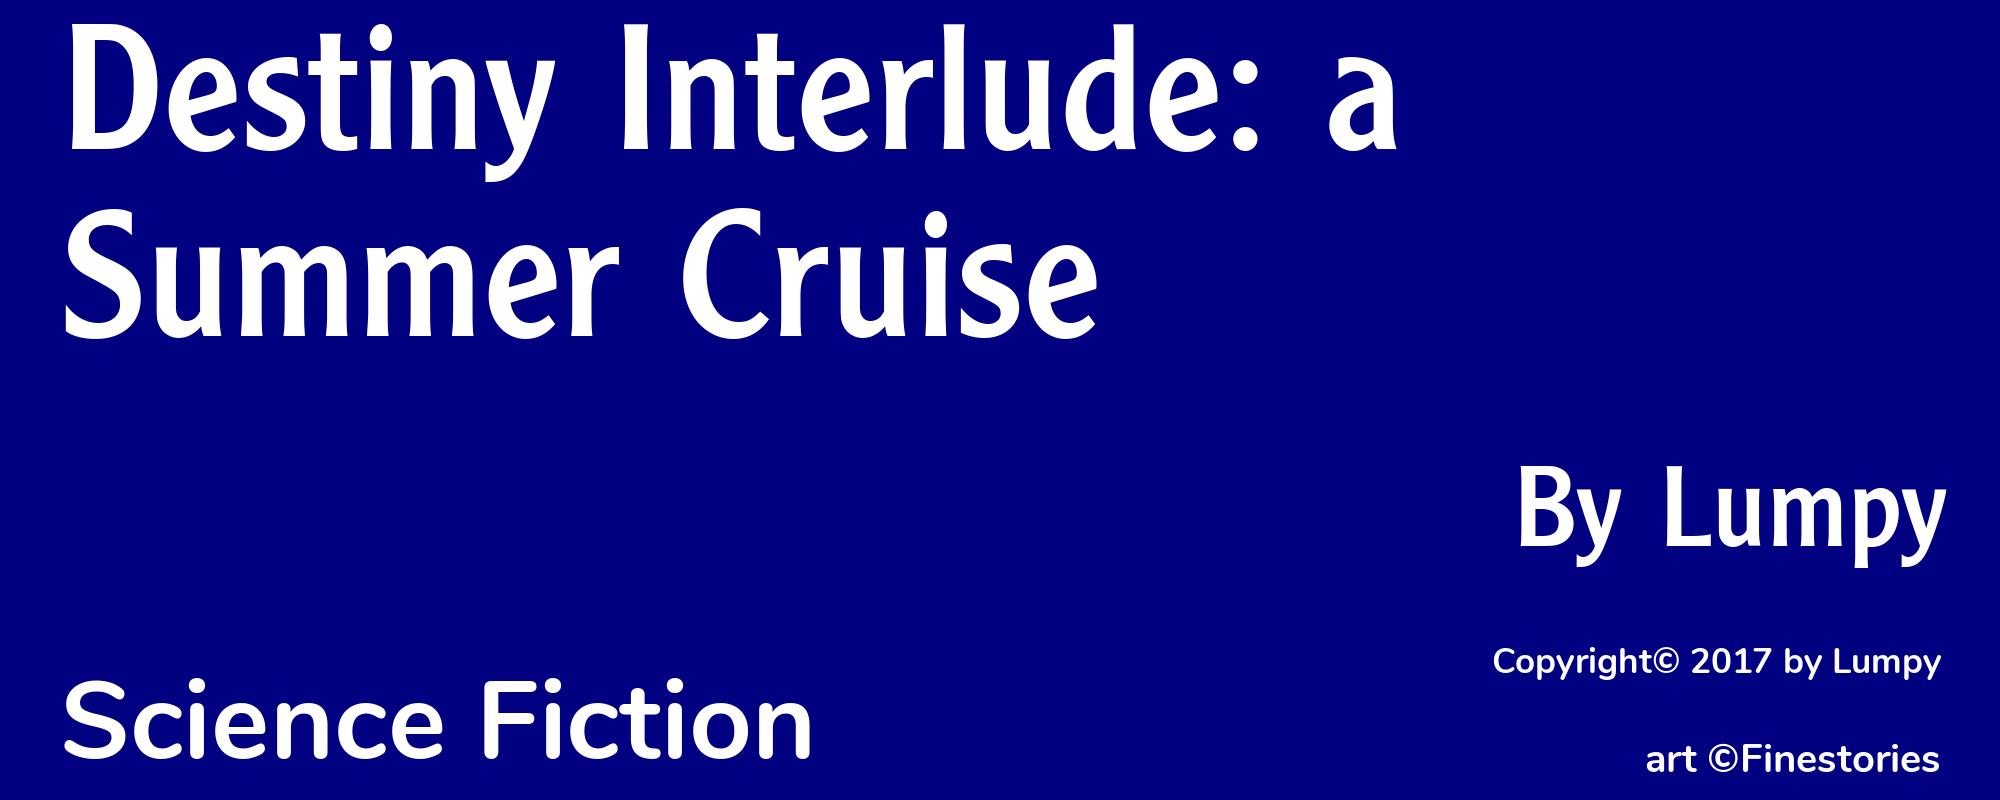 Destiny Interlude: a Summer Cruise - Cover